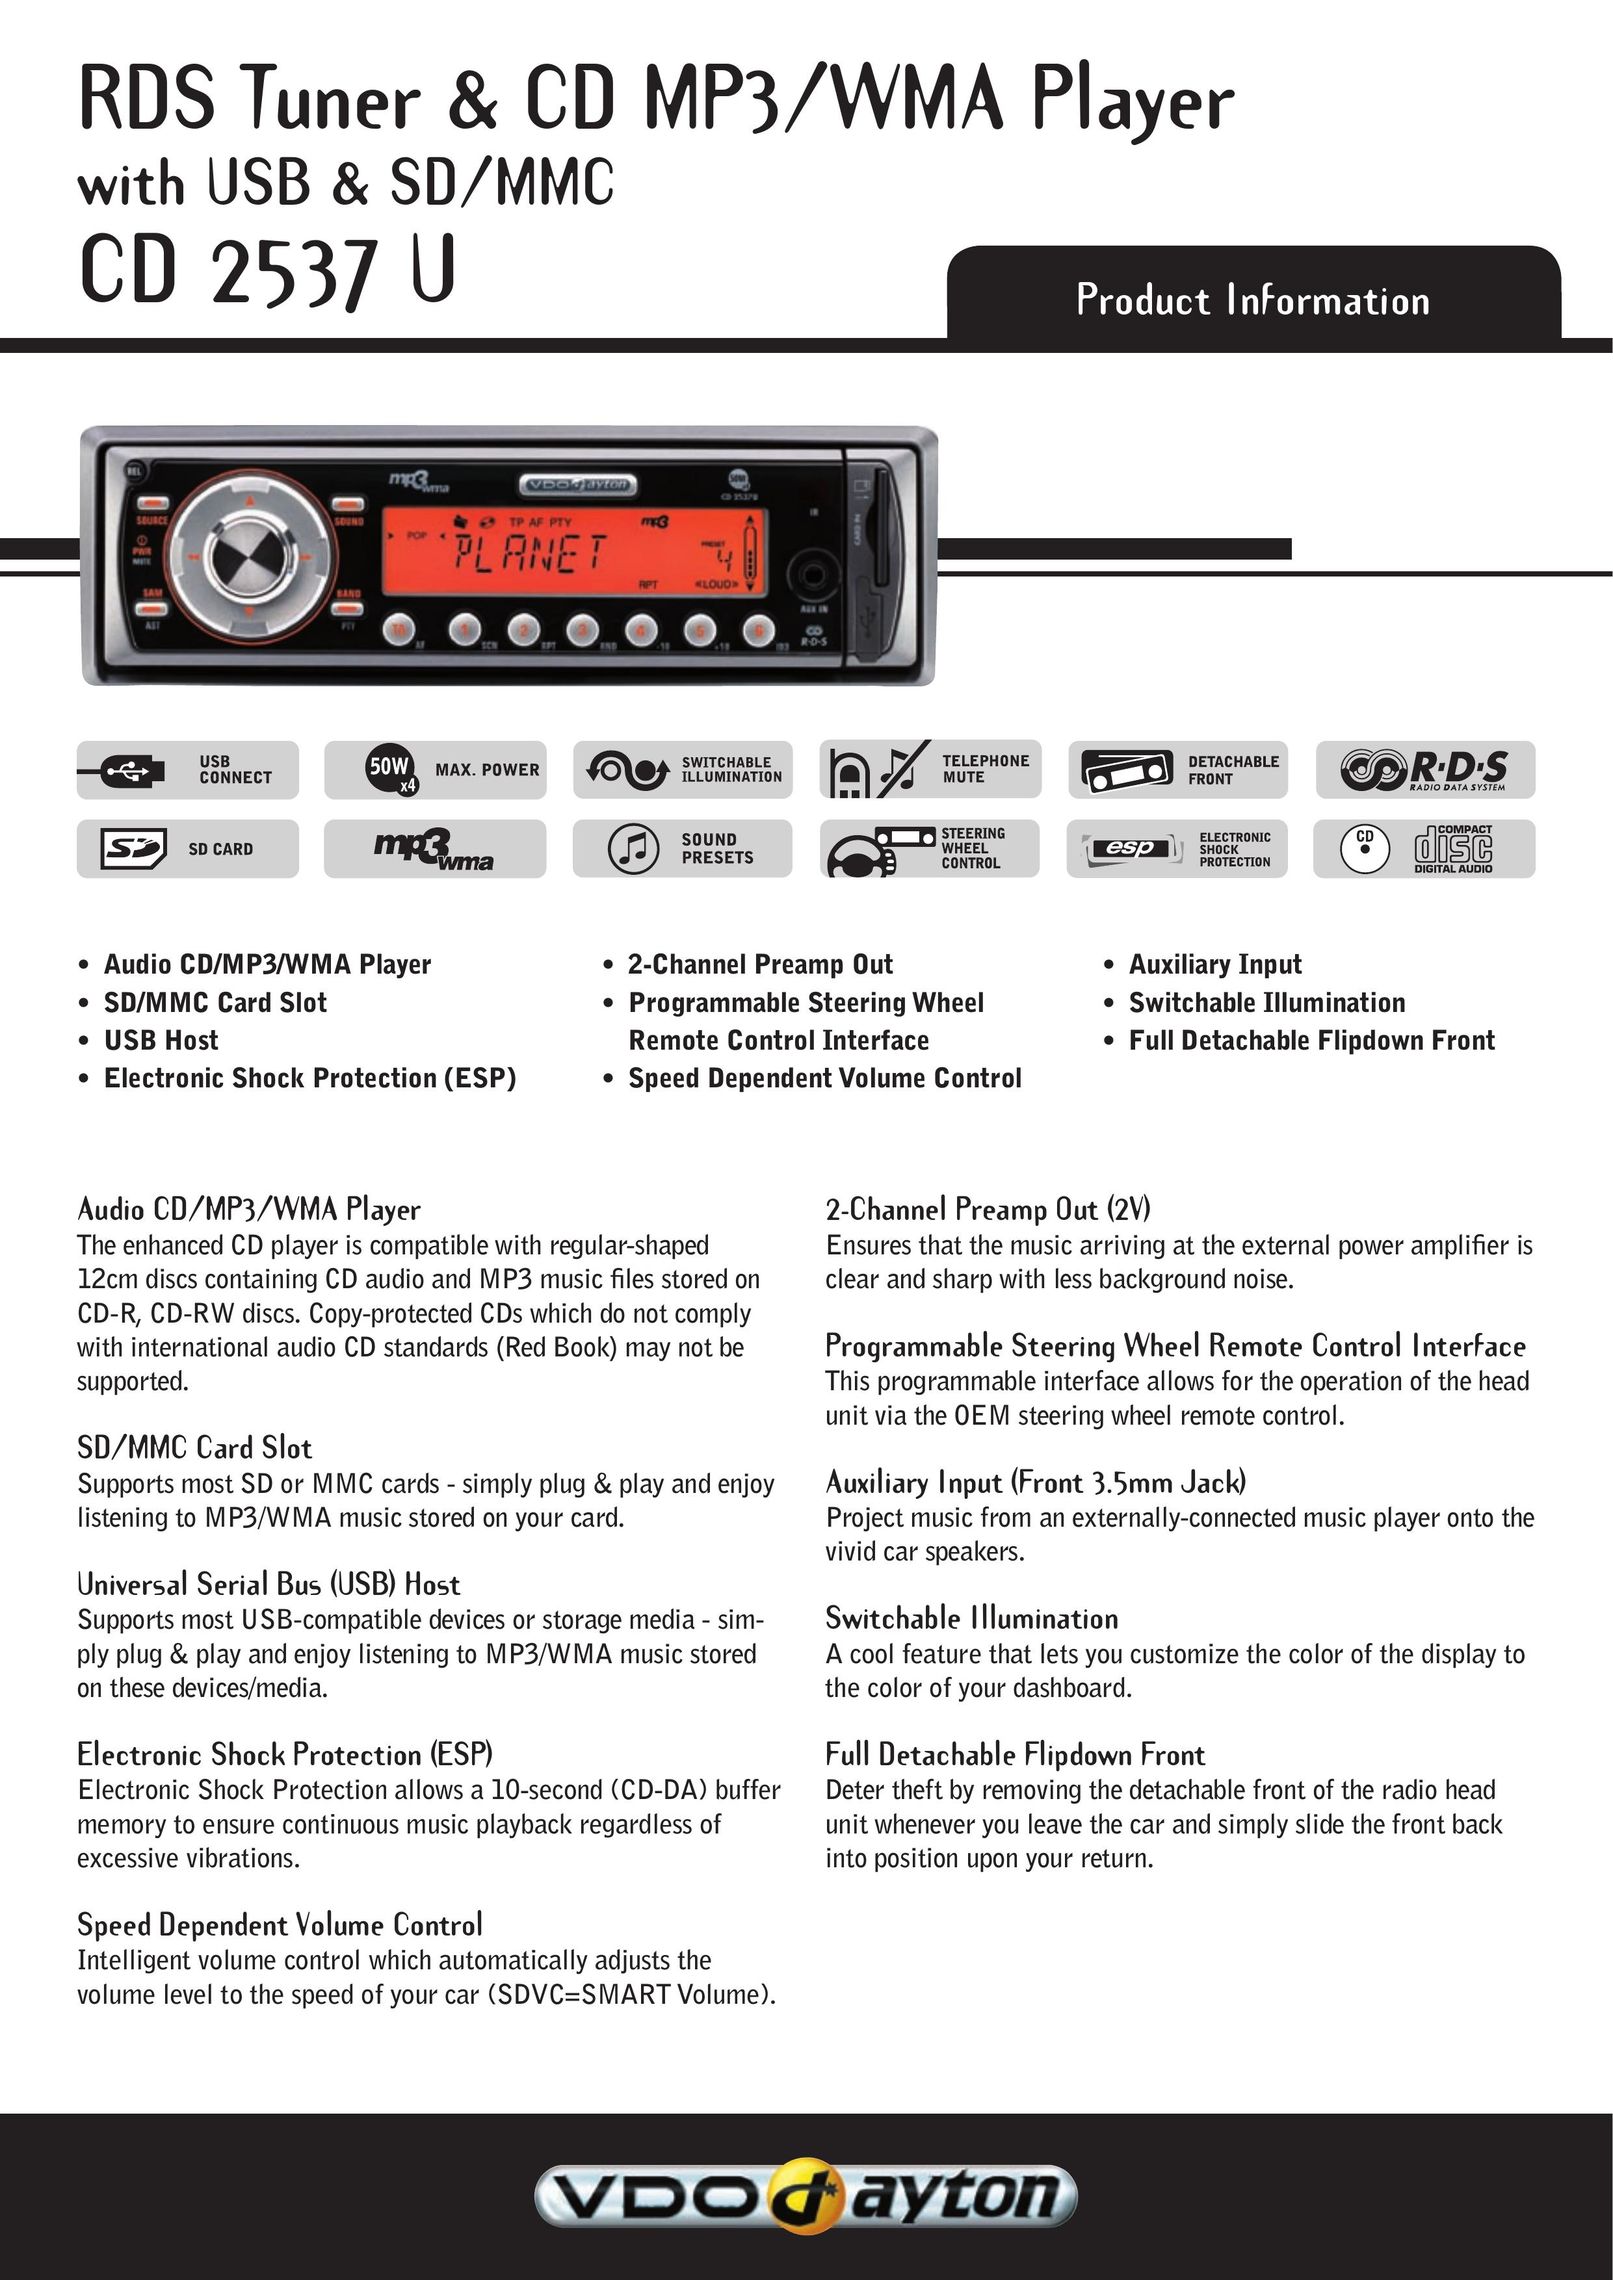 VDO Dayton CD 2537 U Car Stereo System User Manual